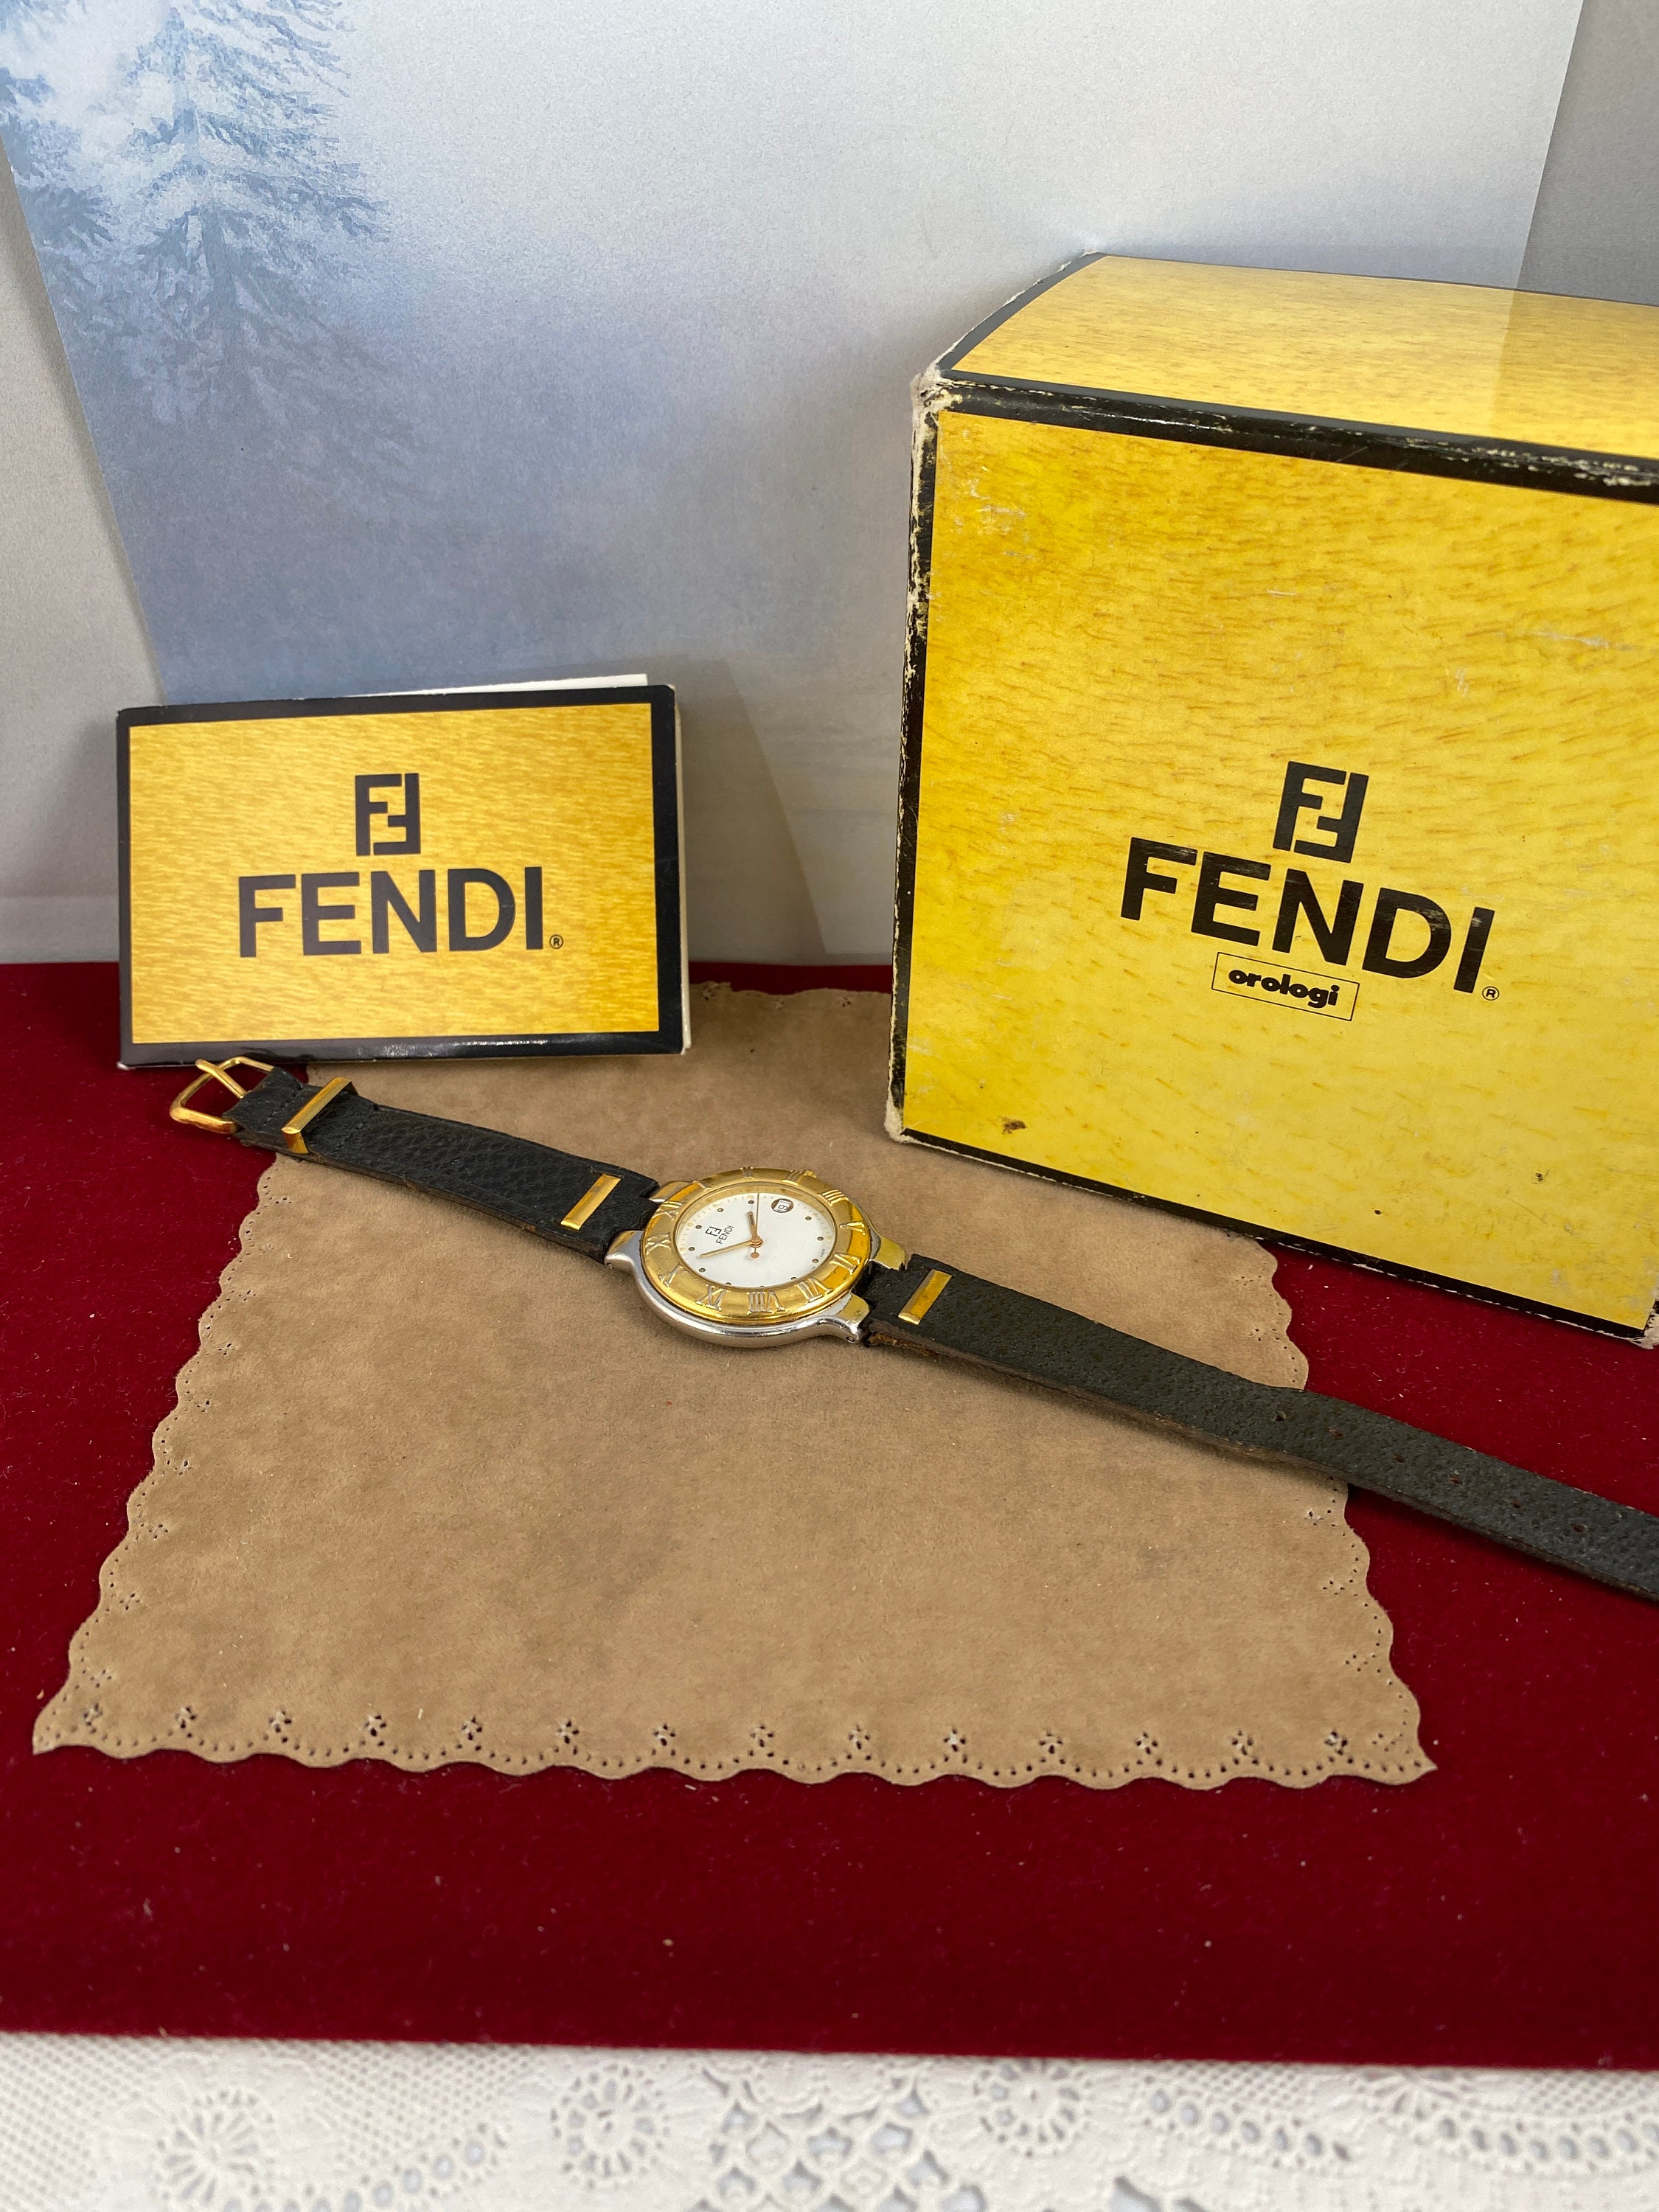 Fendi Orologi Watch